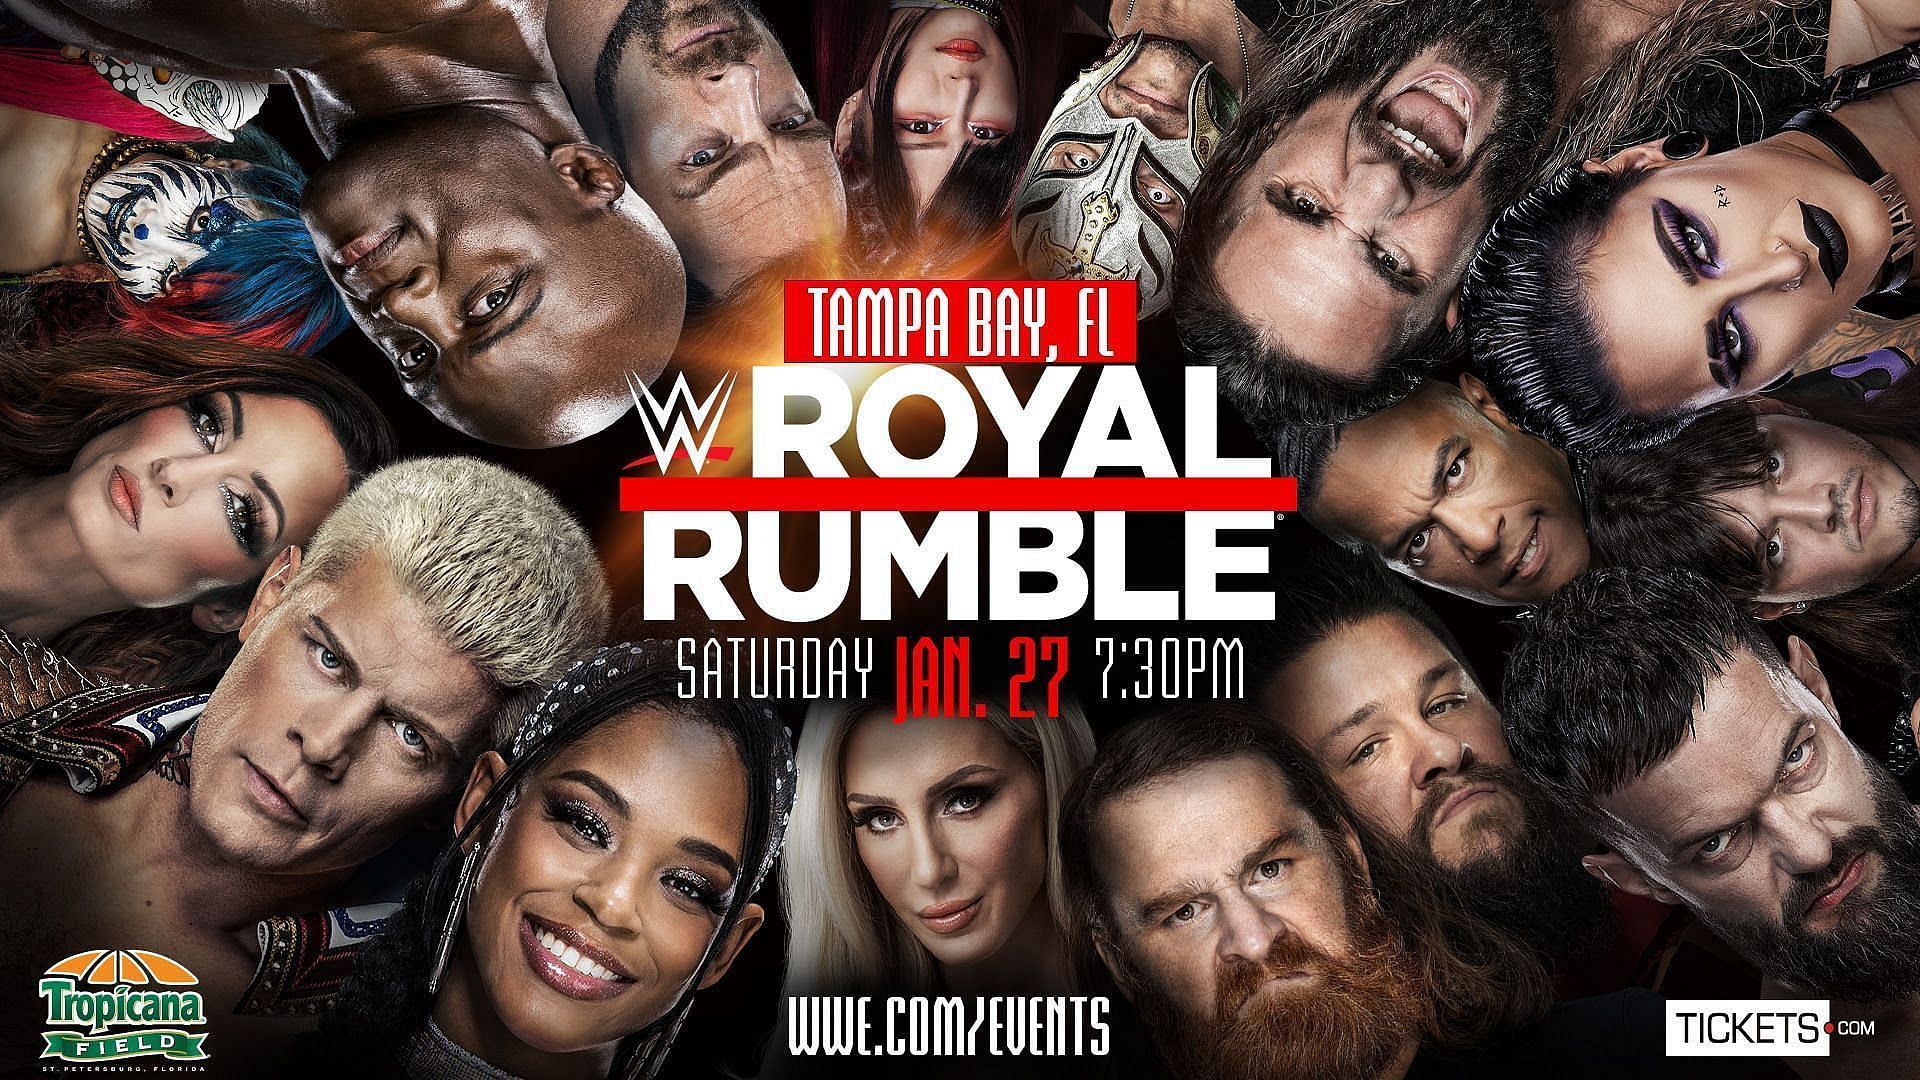  WWE Royal Rumble होगा 27 जनवरी को 